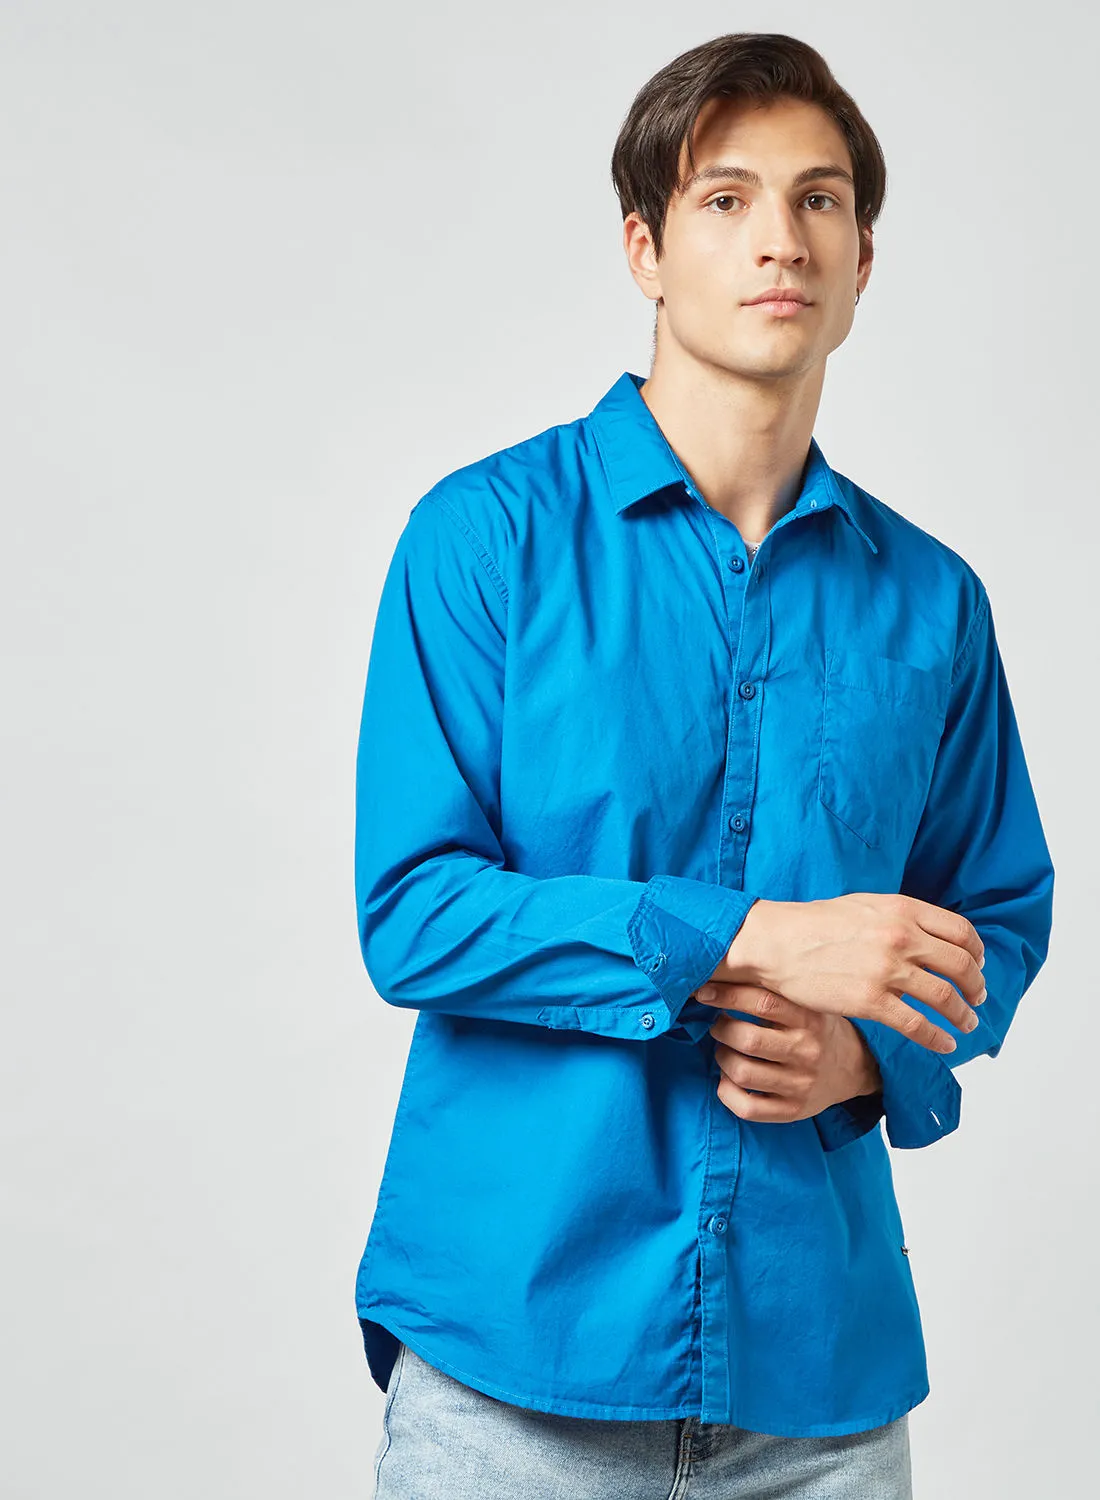 ABOF قميص كاجوال عصري ذو ياقة عادية وياقة عادية أزرق فراشة داكن